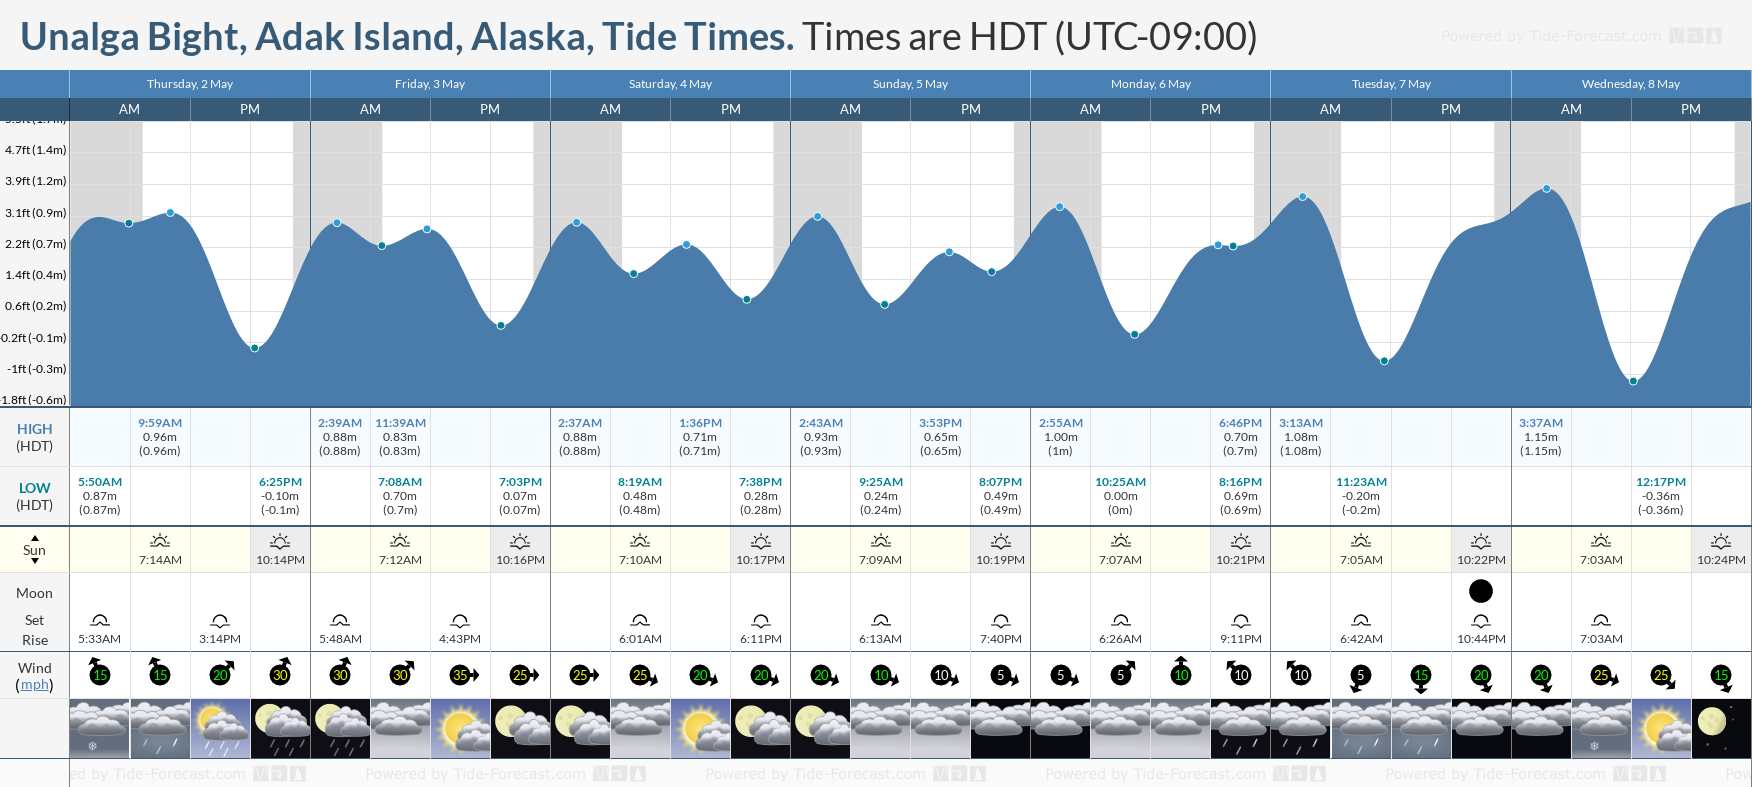 Unalga Bight, Adak Island, Alaska Tide Chart including high and low tide times for the next 7 days